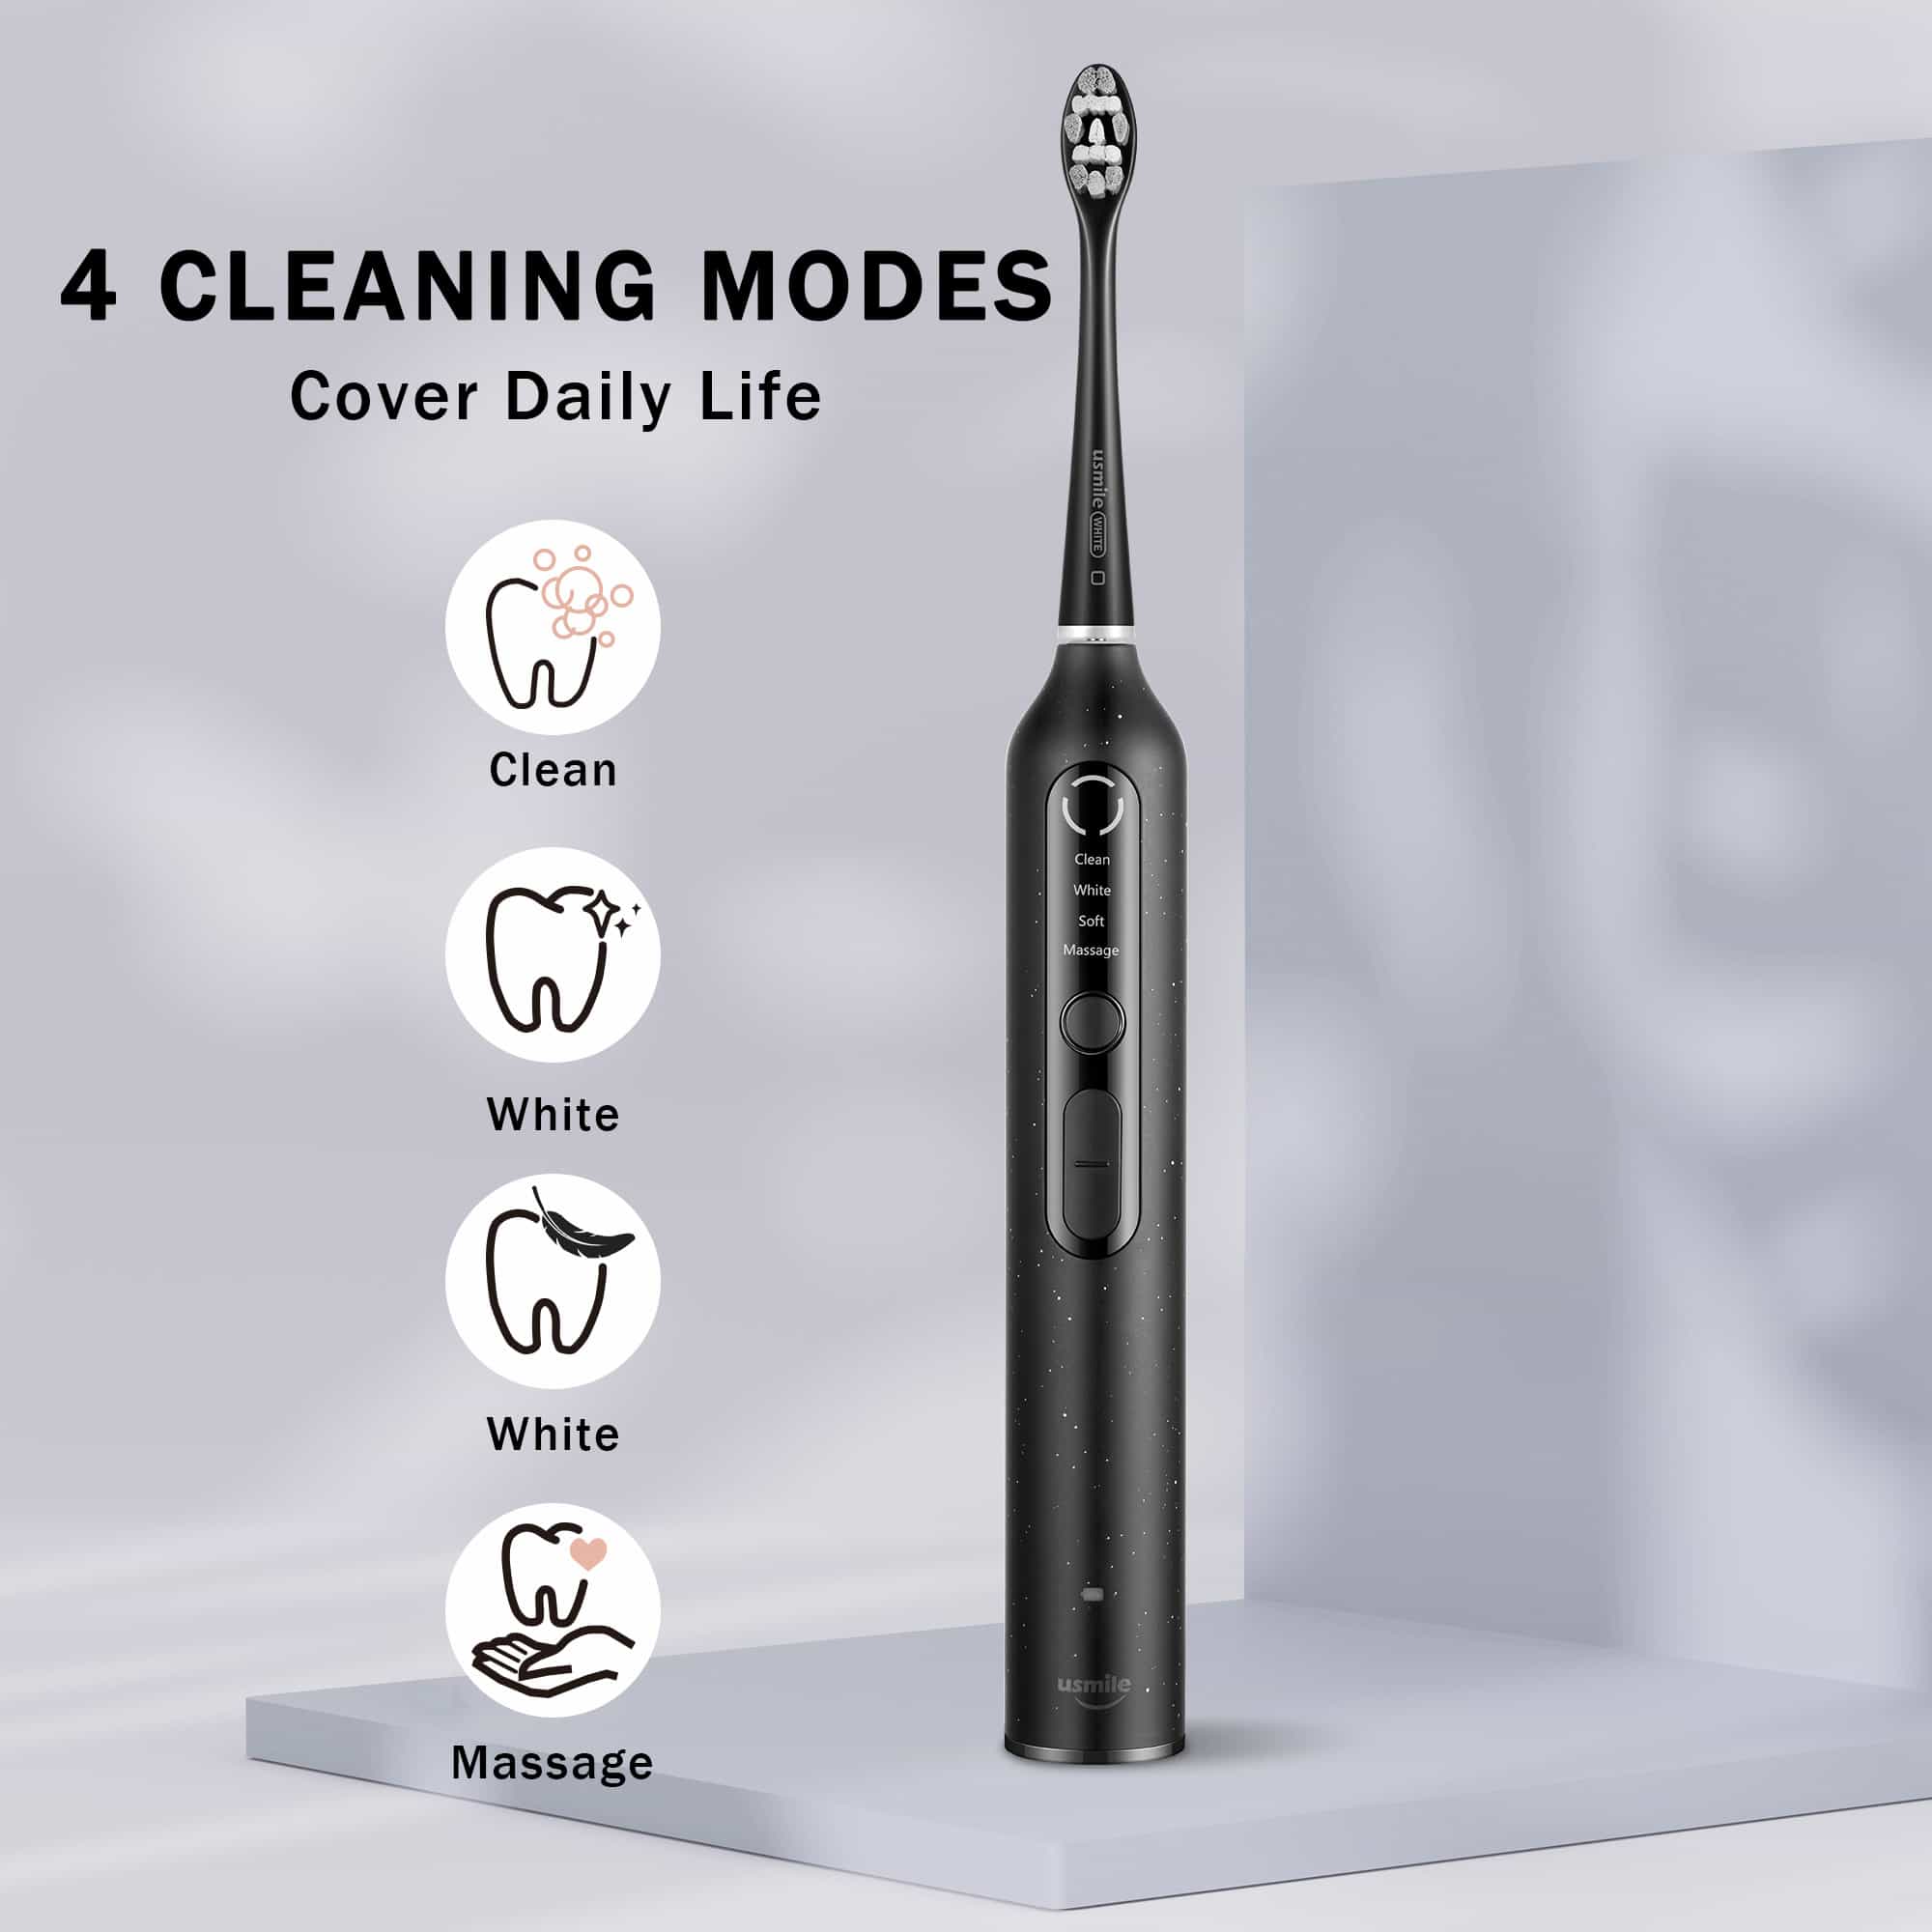 usmile U3 Micro Bubble Ultrasonic Electric Toothbrush Teeth Whitening Sonic Toothbrush